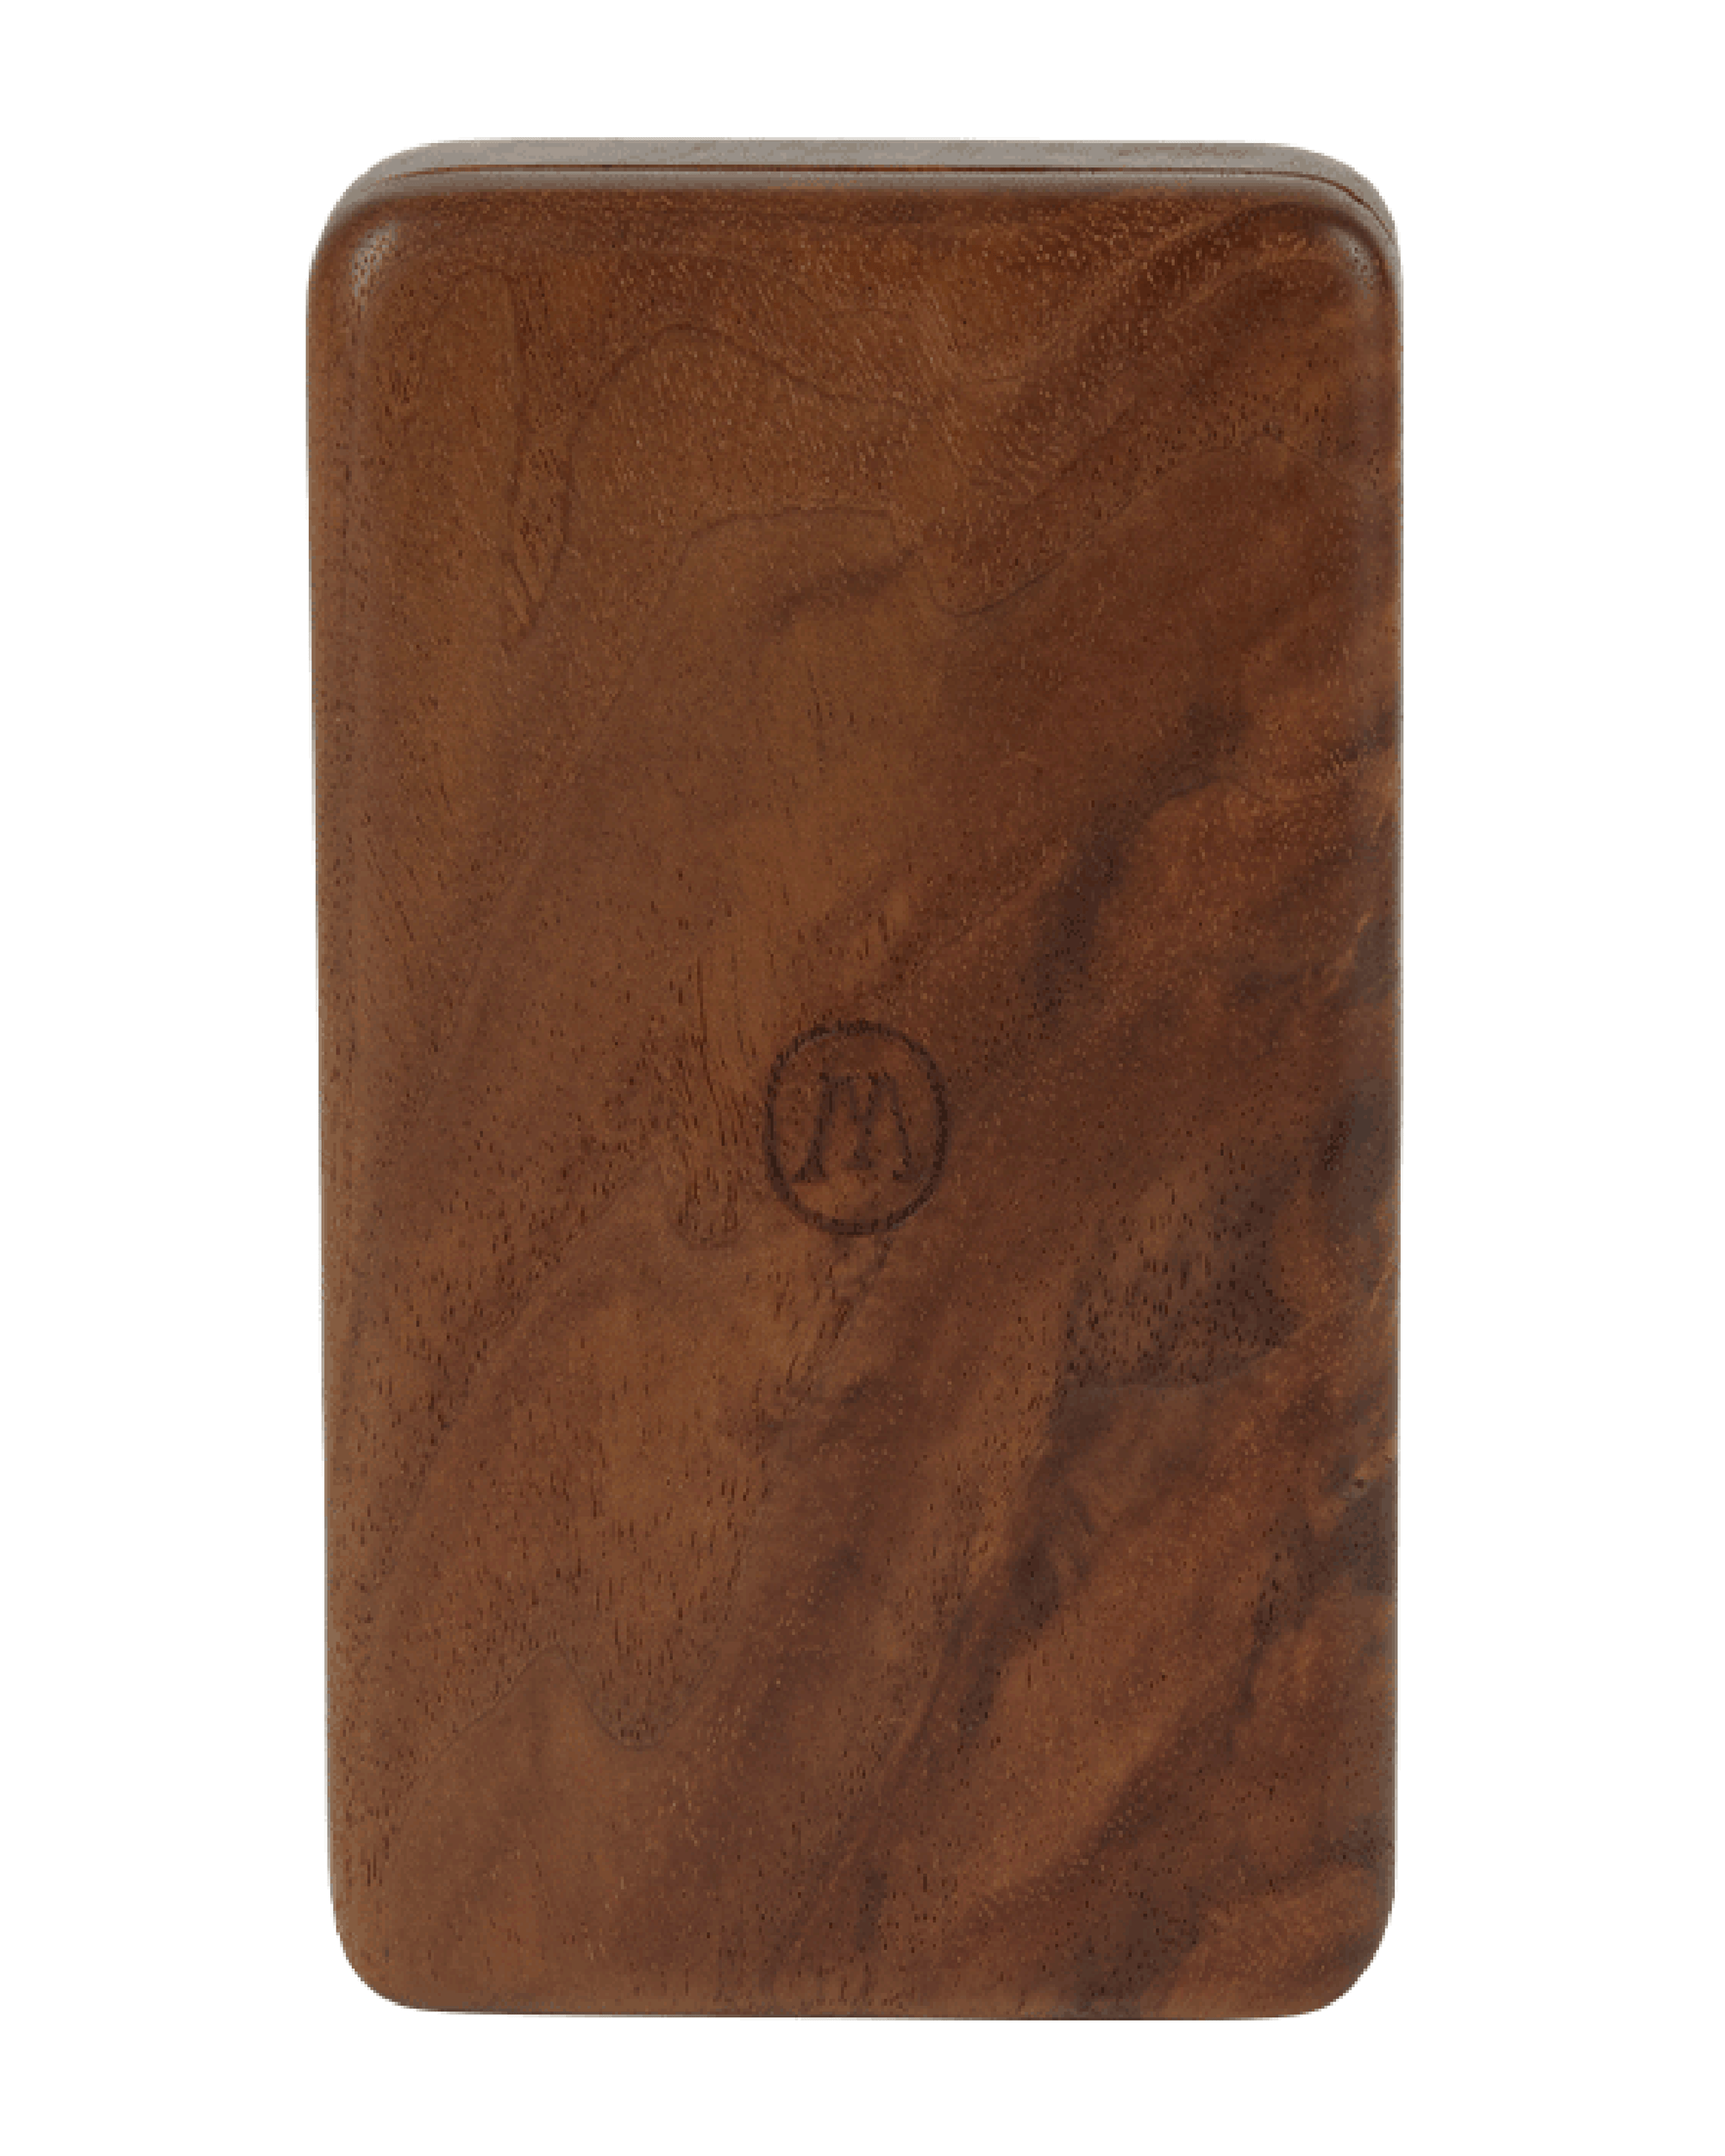 Marley Natural | Small Wooden Multi-Purpose Case | 120mm - Black Walnut - 3